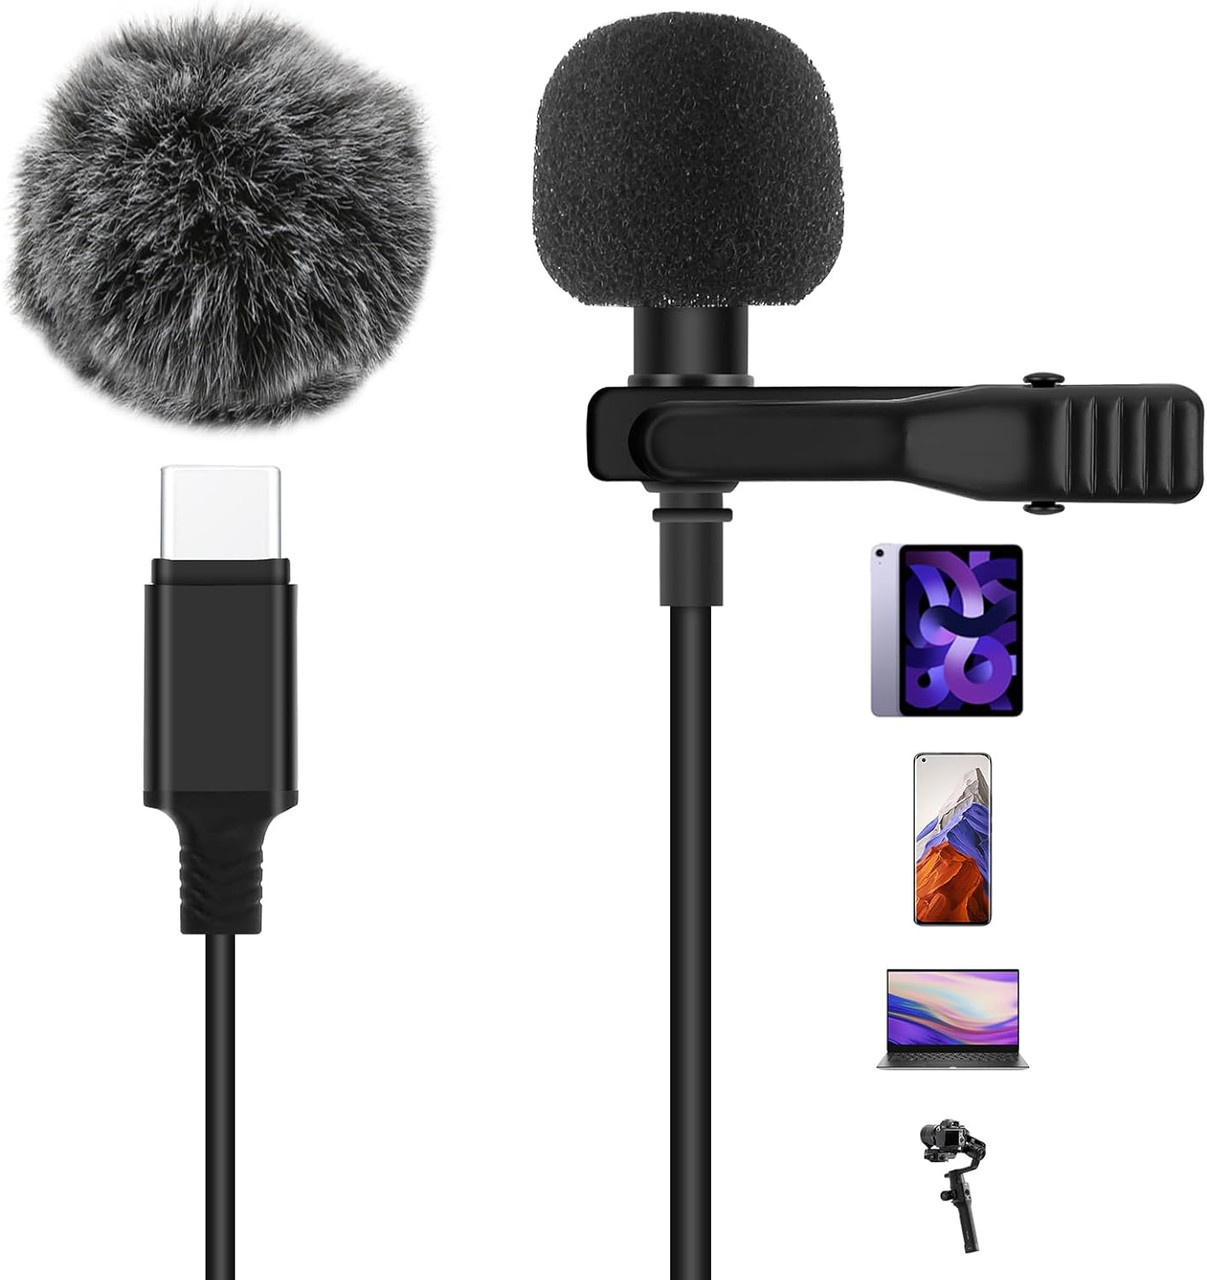 AGPtEK USB Condenser Microphone